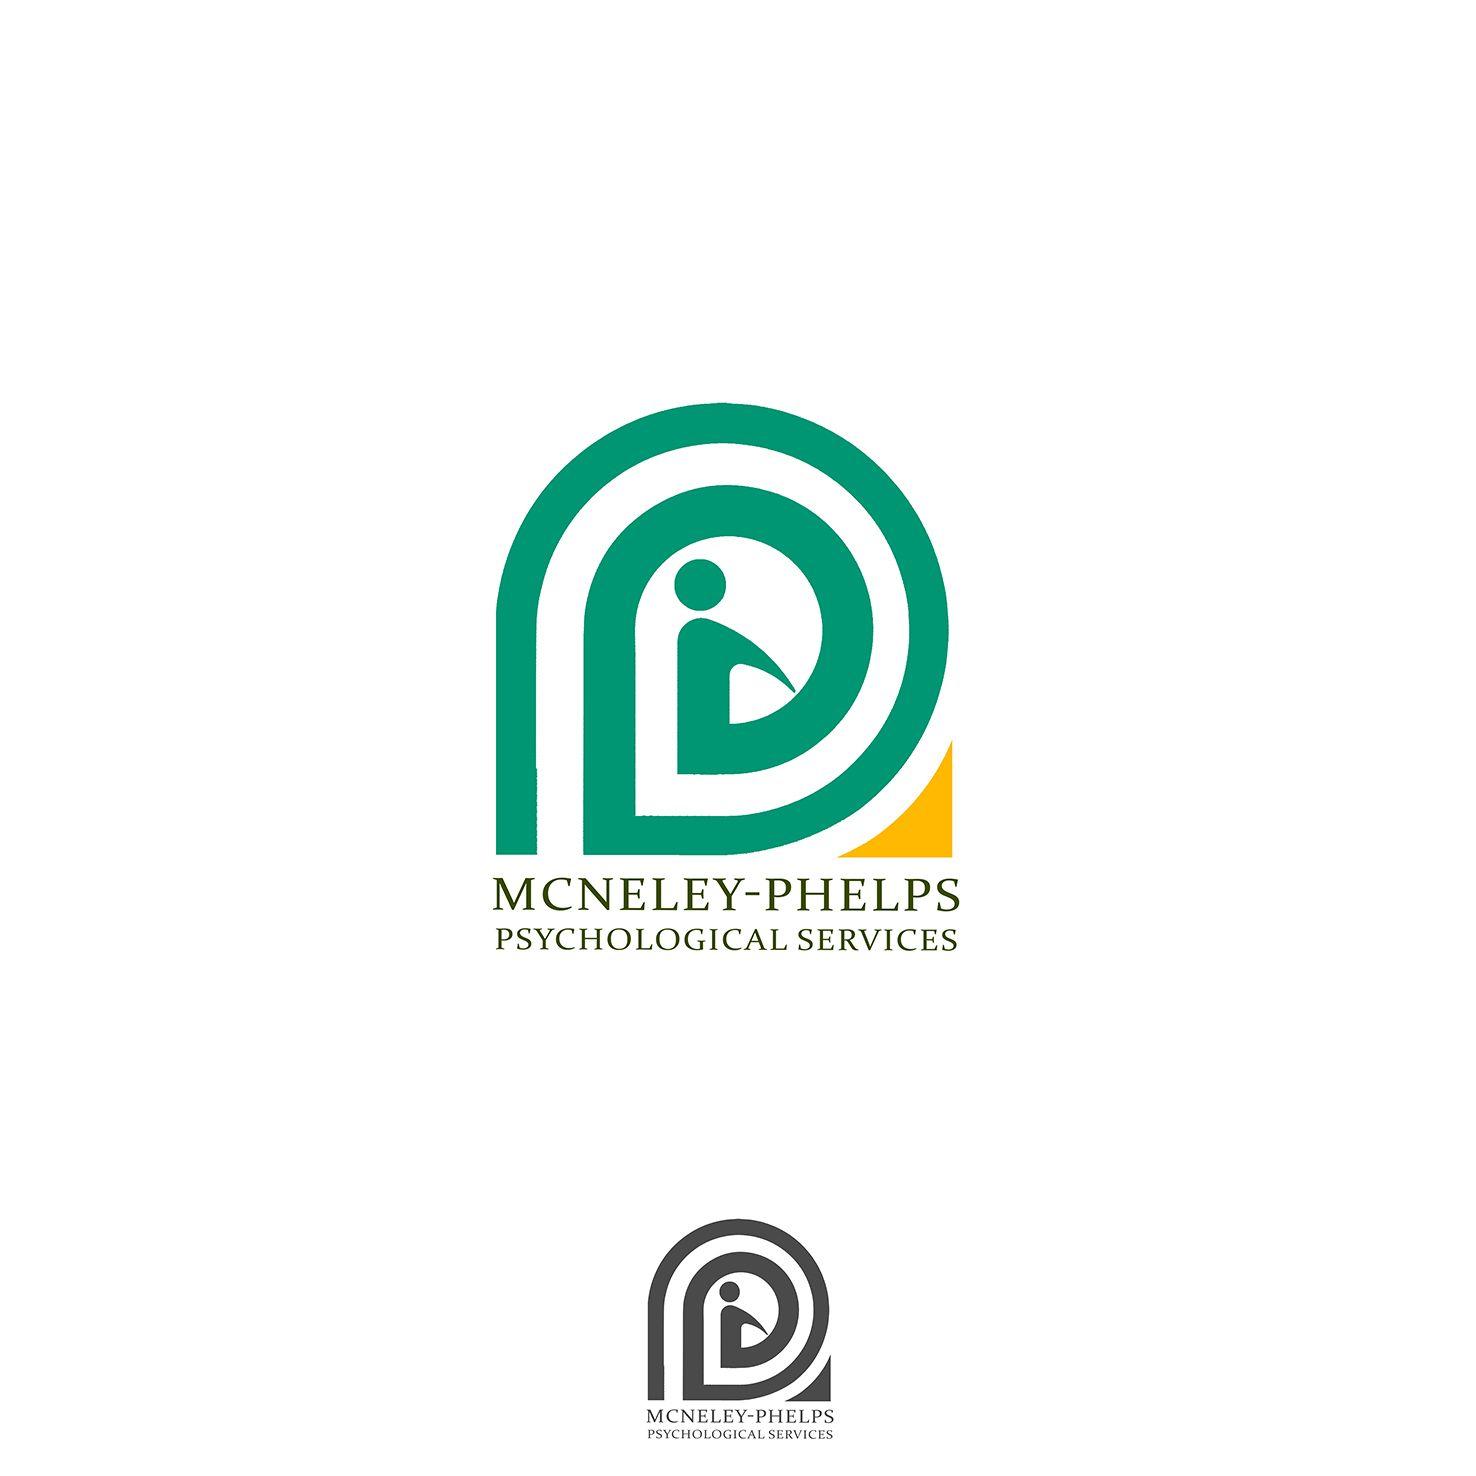 Psych Logo - Elegant, Traditional, Mental Health Logo Design for McNeley-Phelps ...